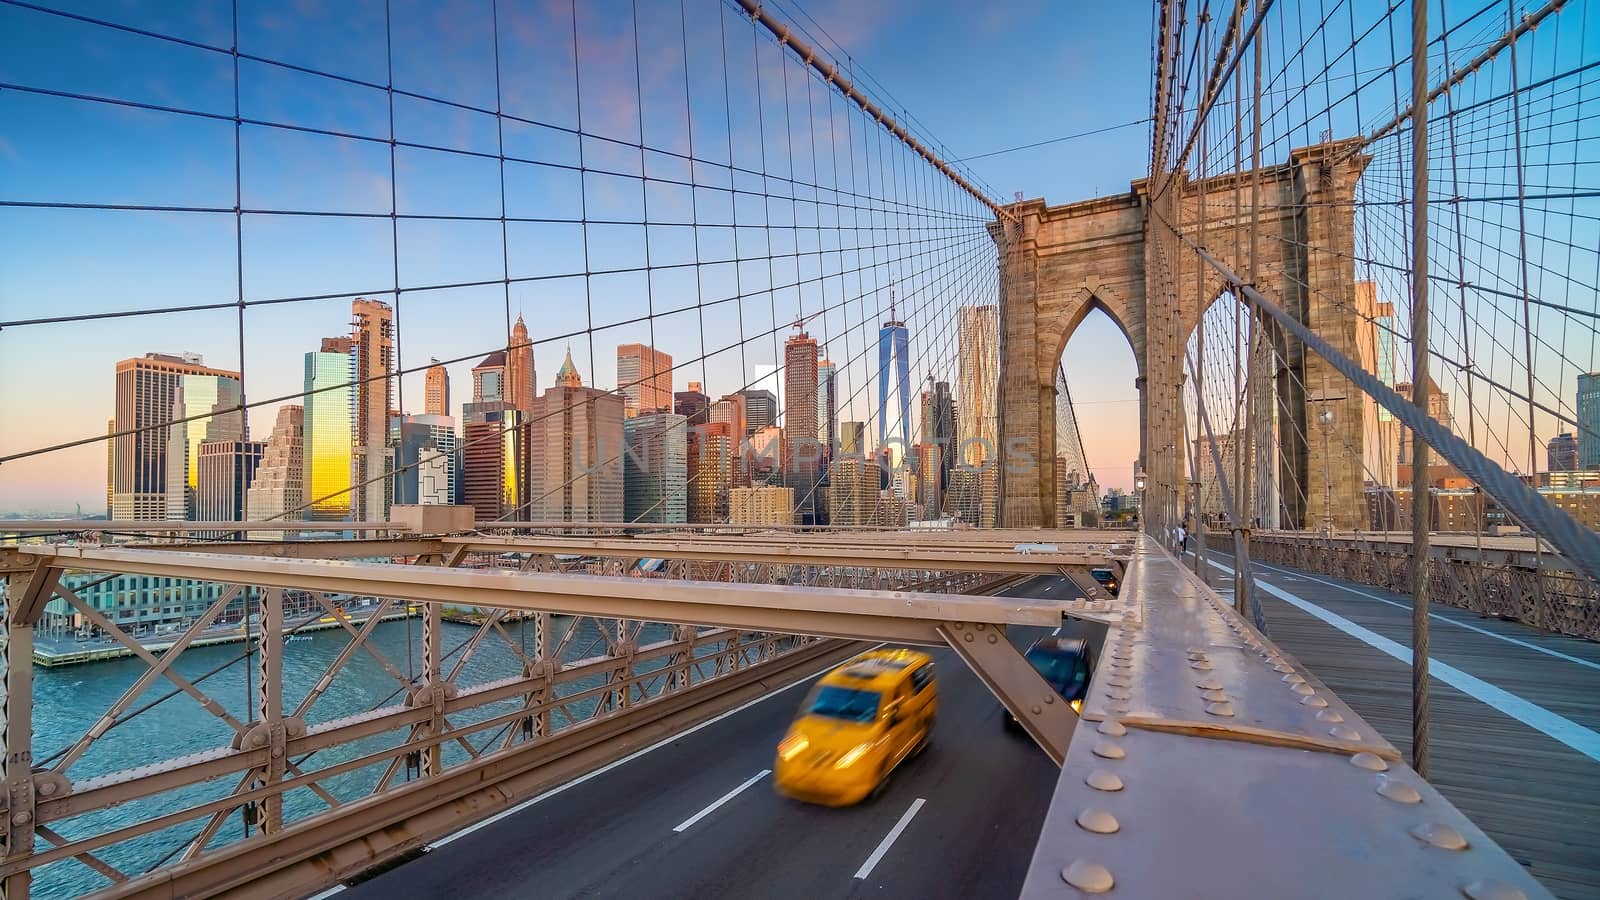 Brooklyn Bridge in New York City, USA by f11photo